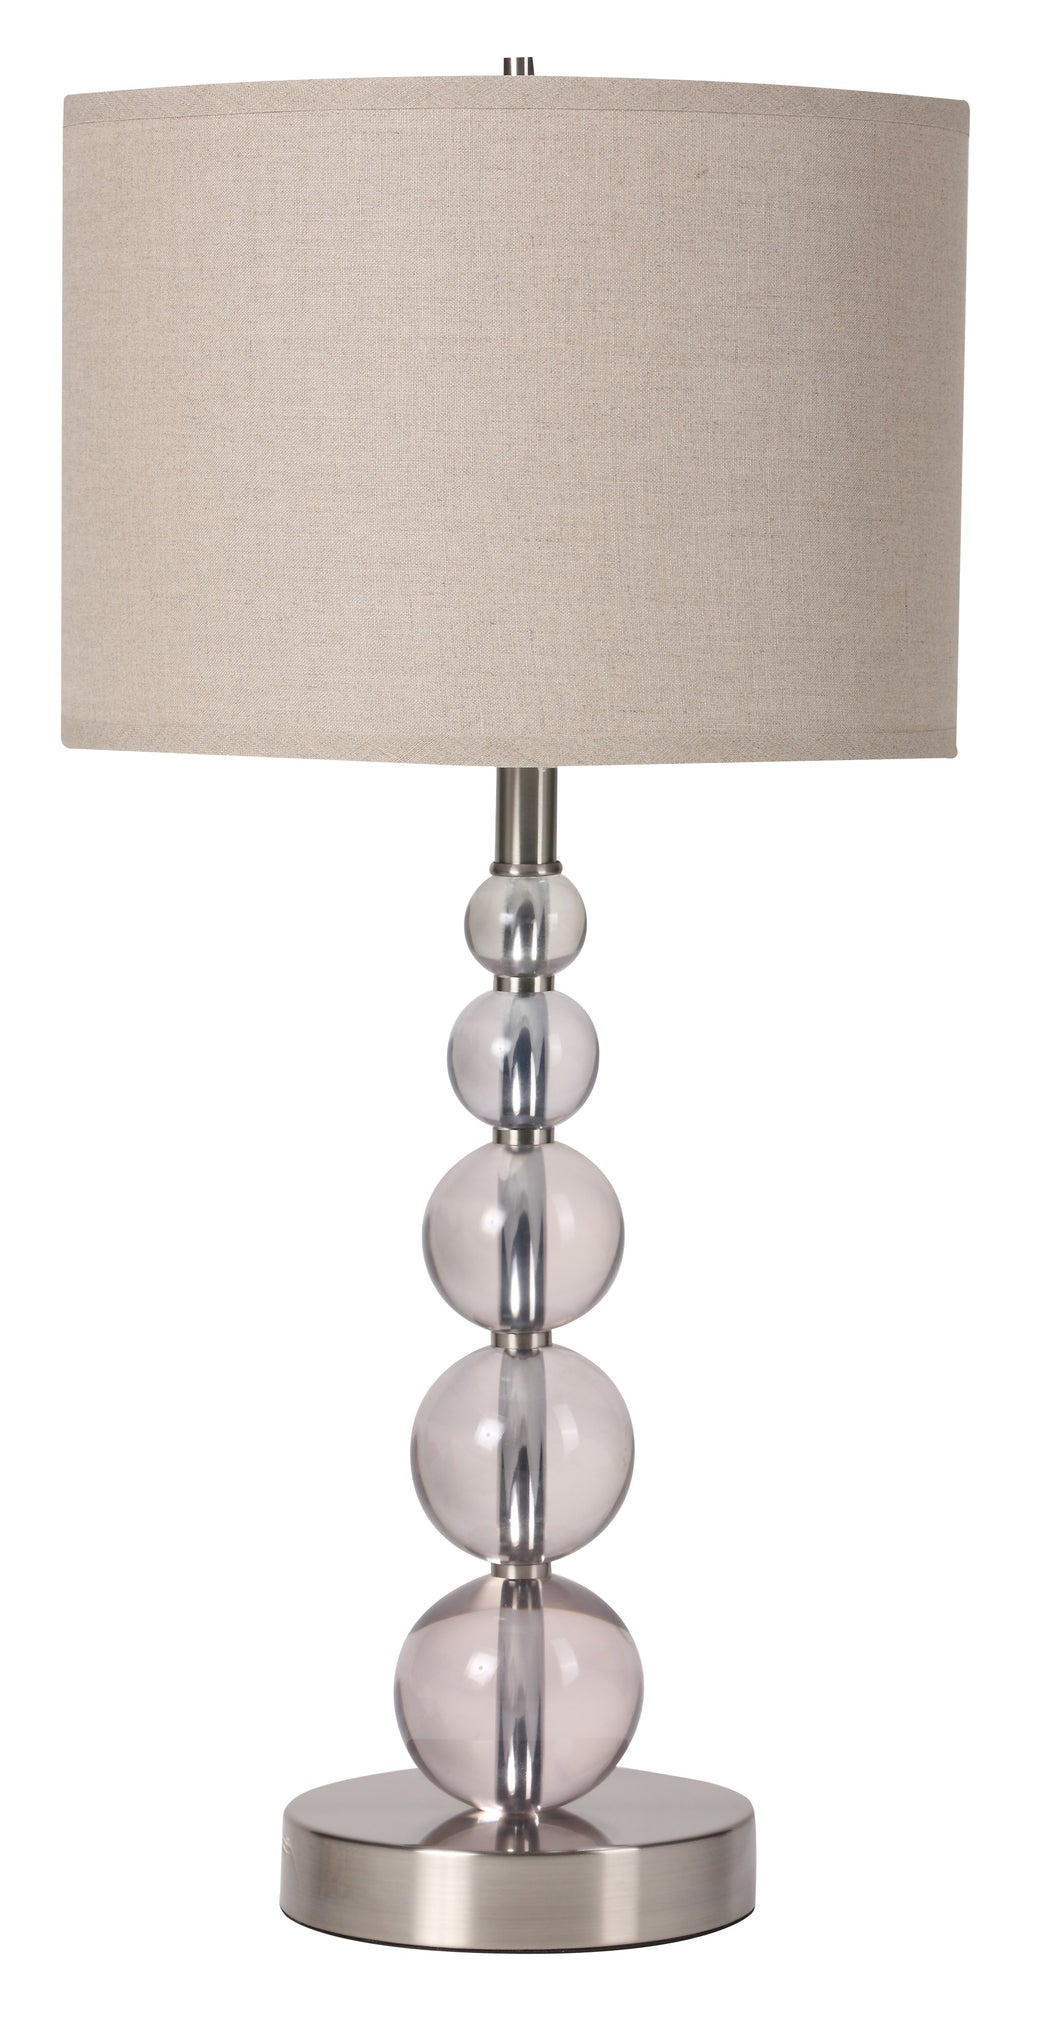 Bethel International - BH09 - One Light Table Lamp - Table Lamp